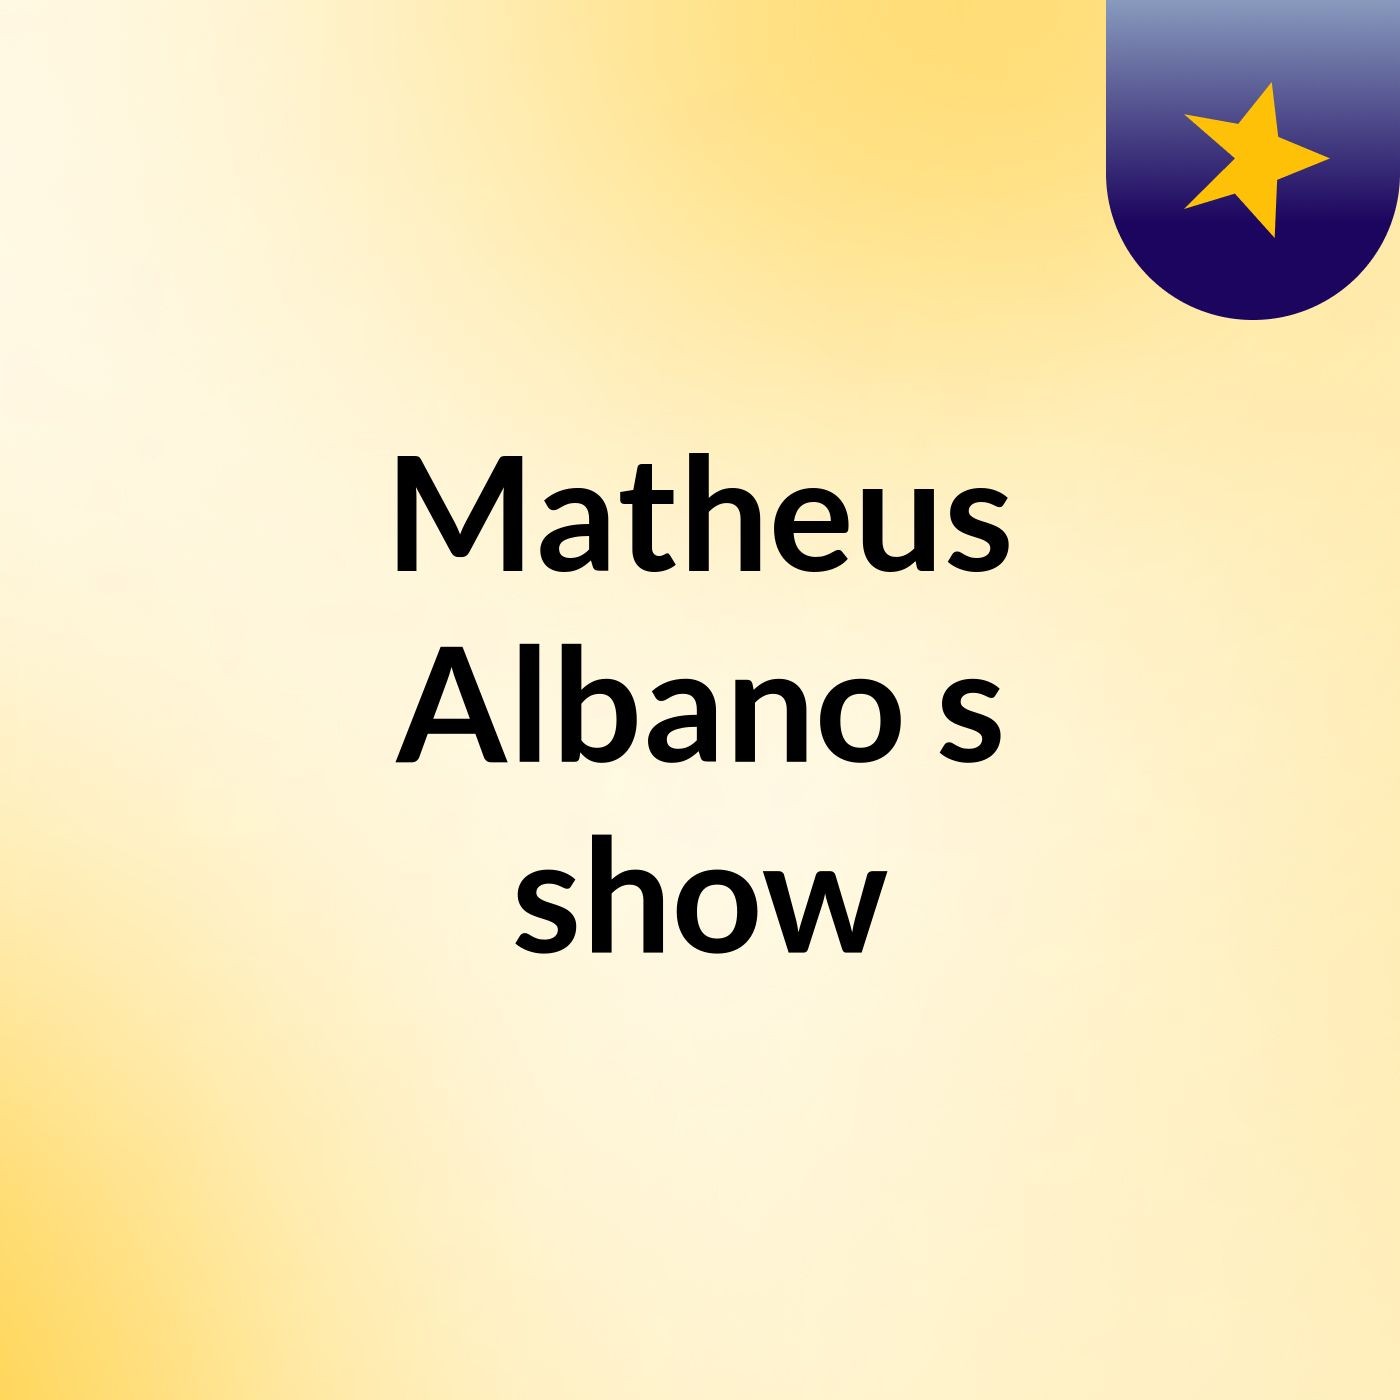 Matheus Albano's show